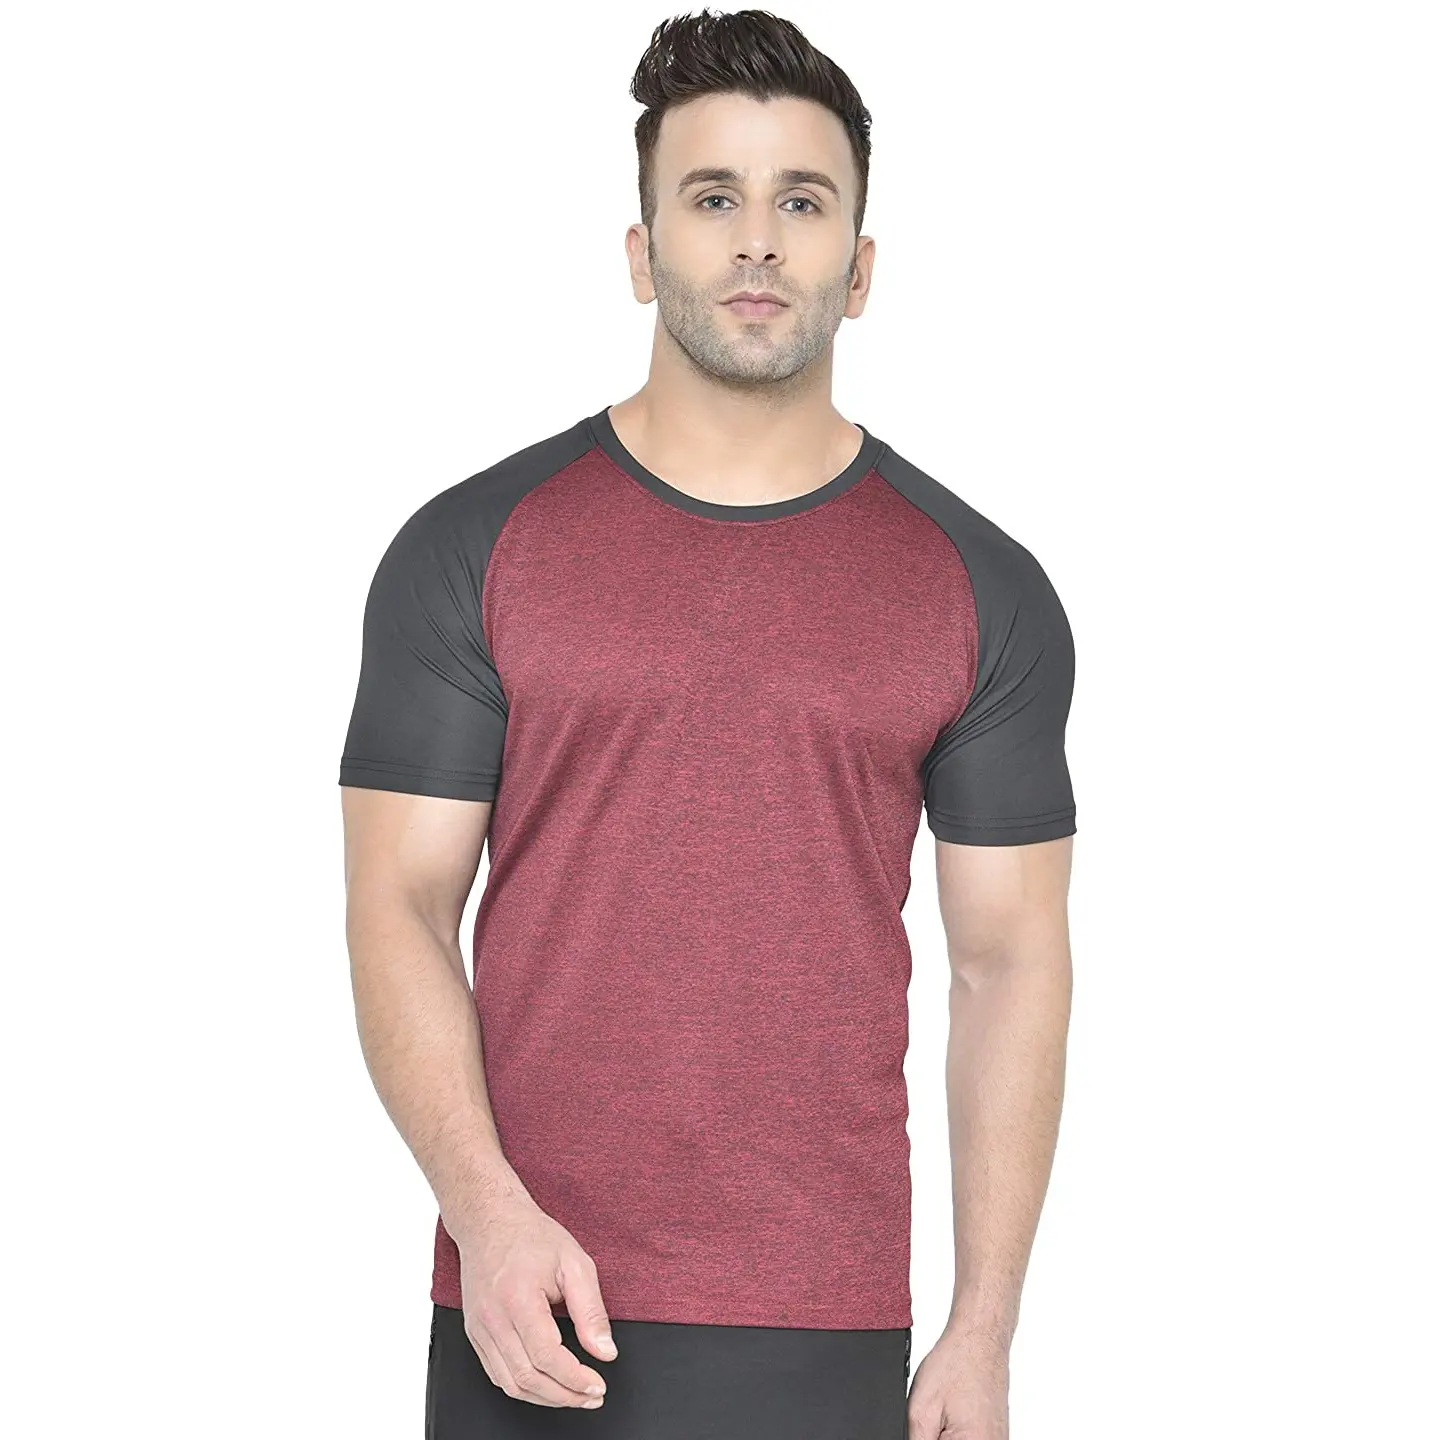 Özelleştirilebilir ince Fit düz renk Mens T Shirt % 100% Polyester yumuşak ve rahat T Shirt toptan ihracat bangladeş